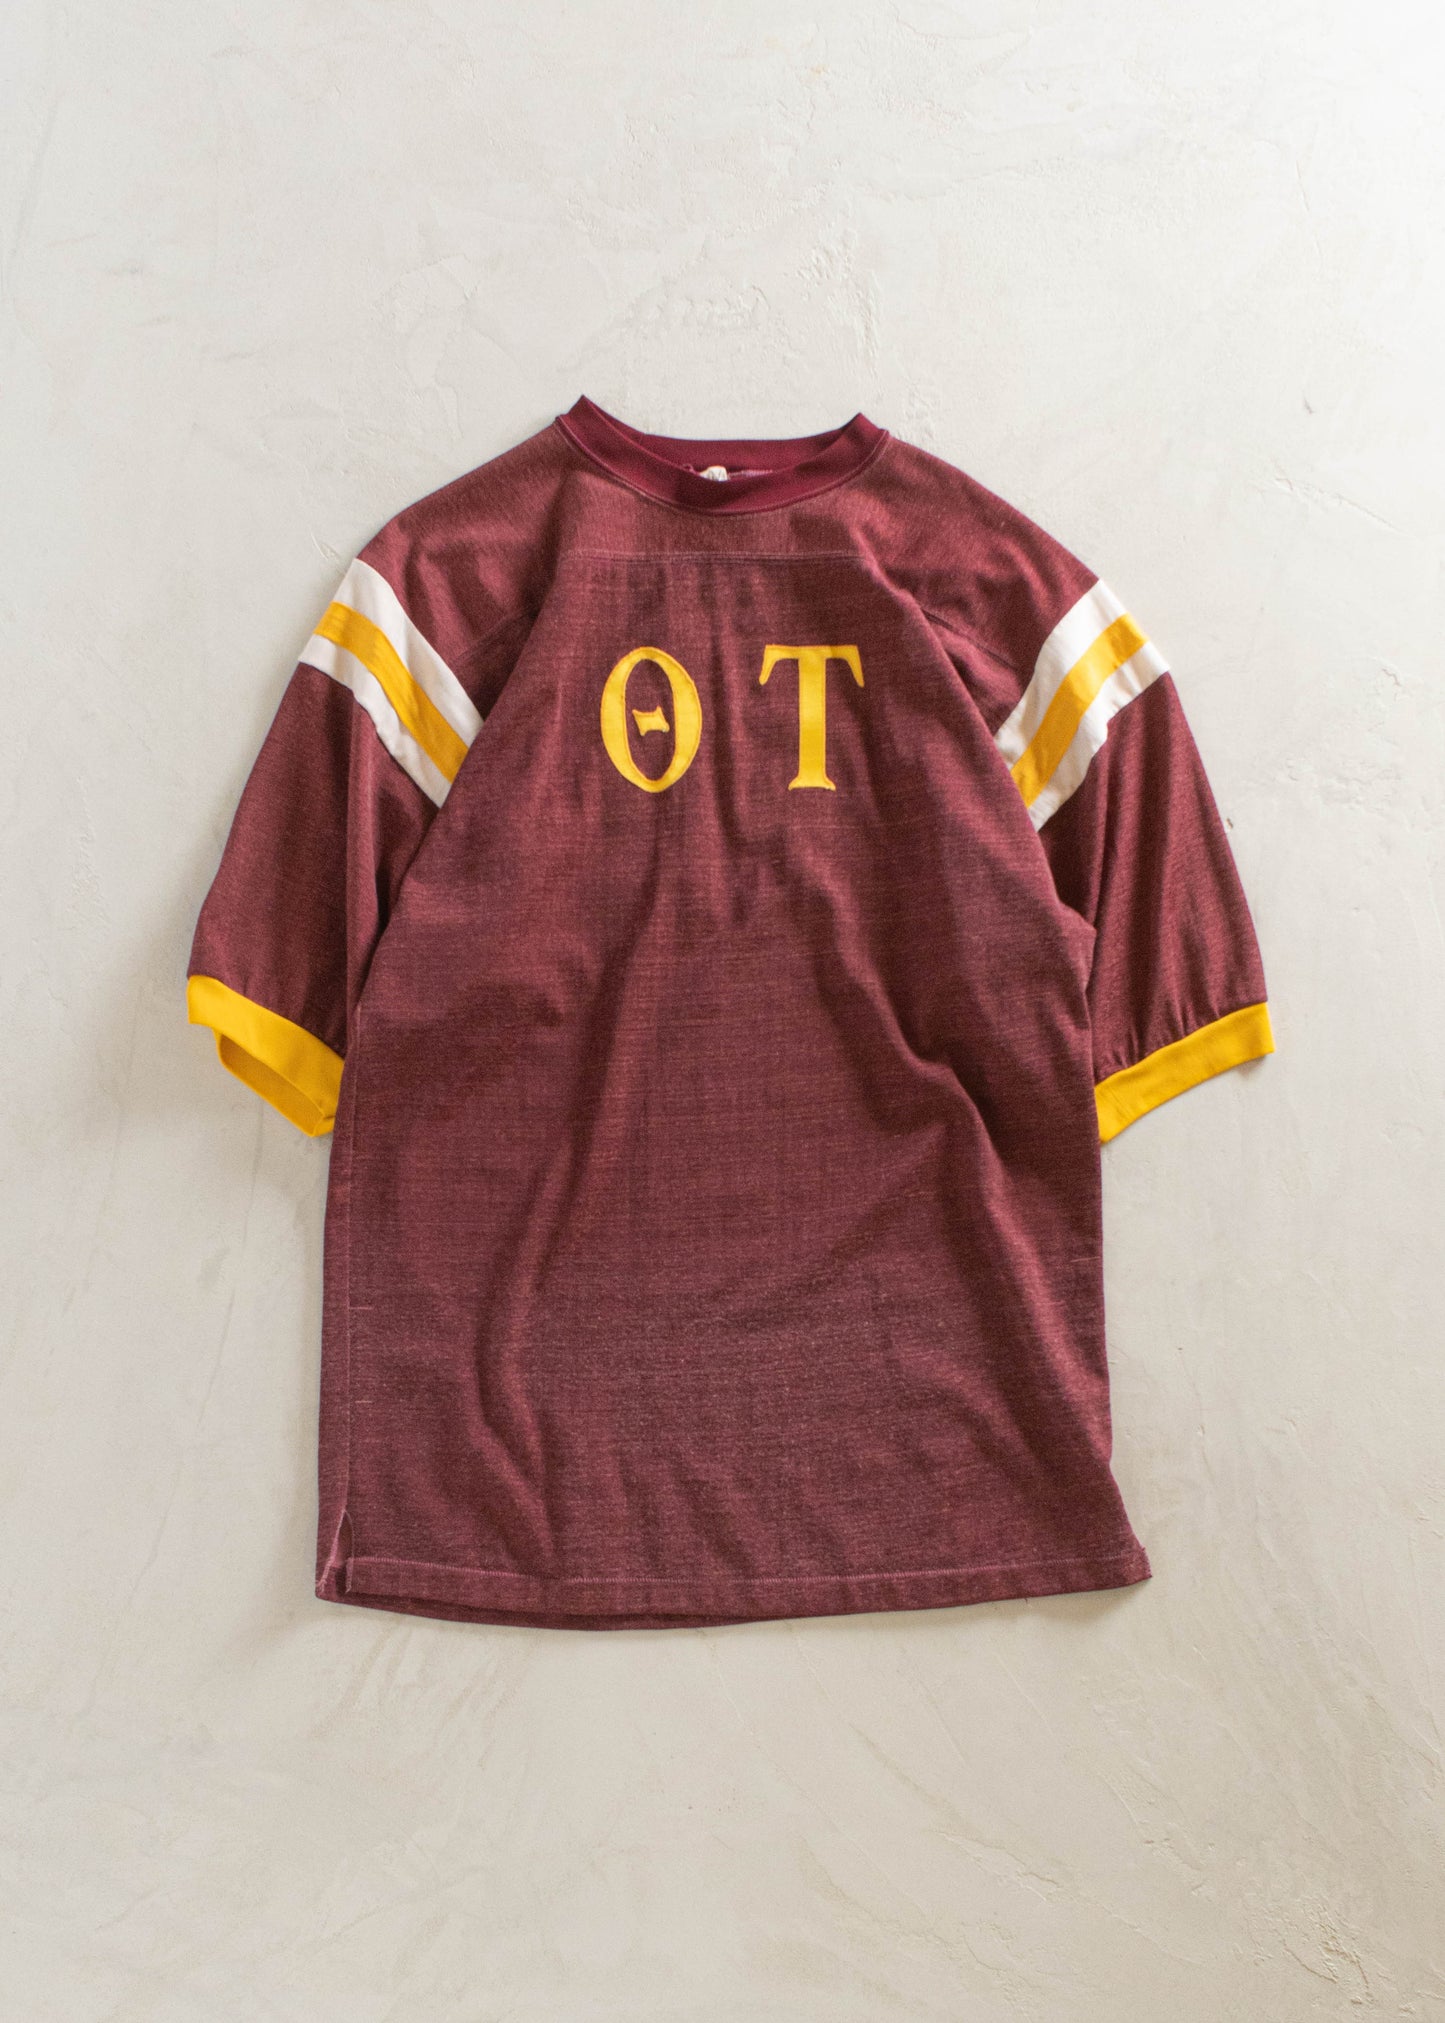 Vintage 1980s Sport Jersey Size M/L